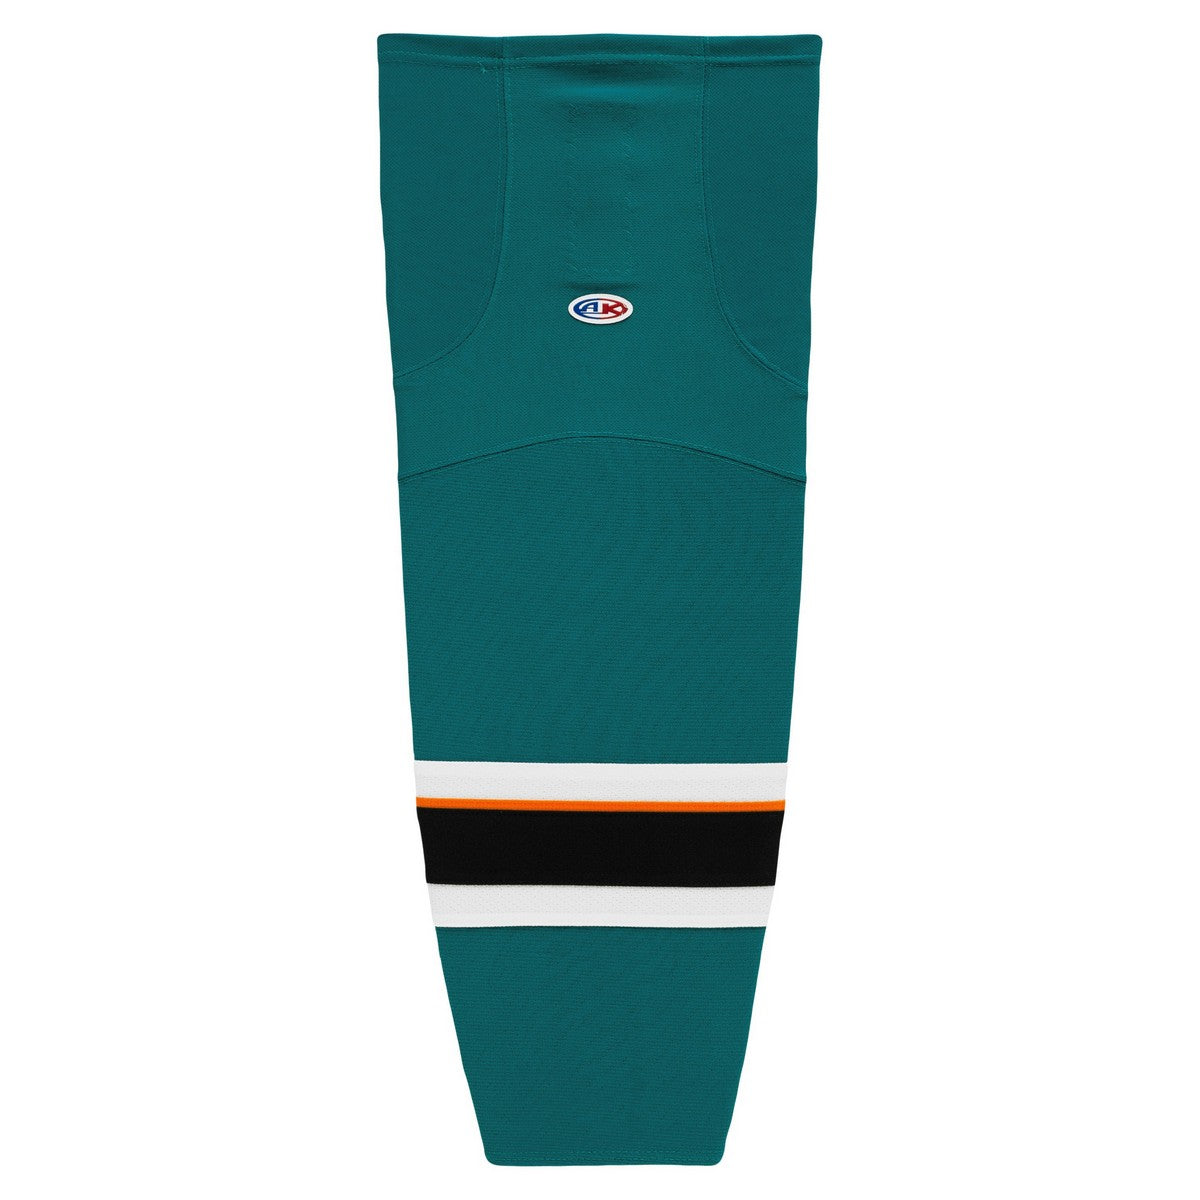 Striped Dry-Flex Moisture Wicking Teal/Black/Orange Hockey Socks